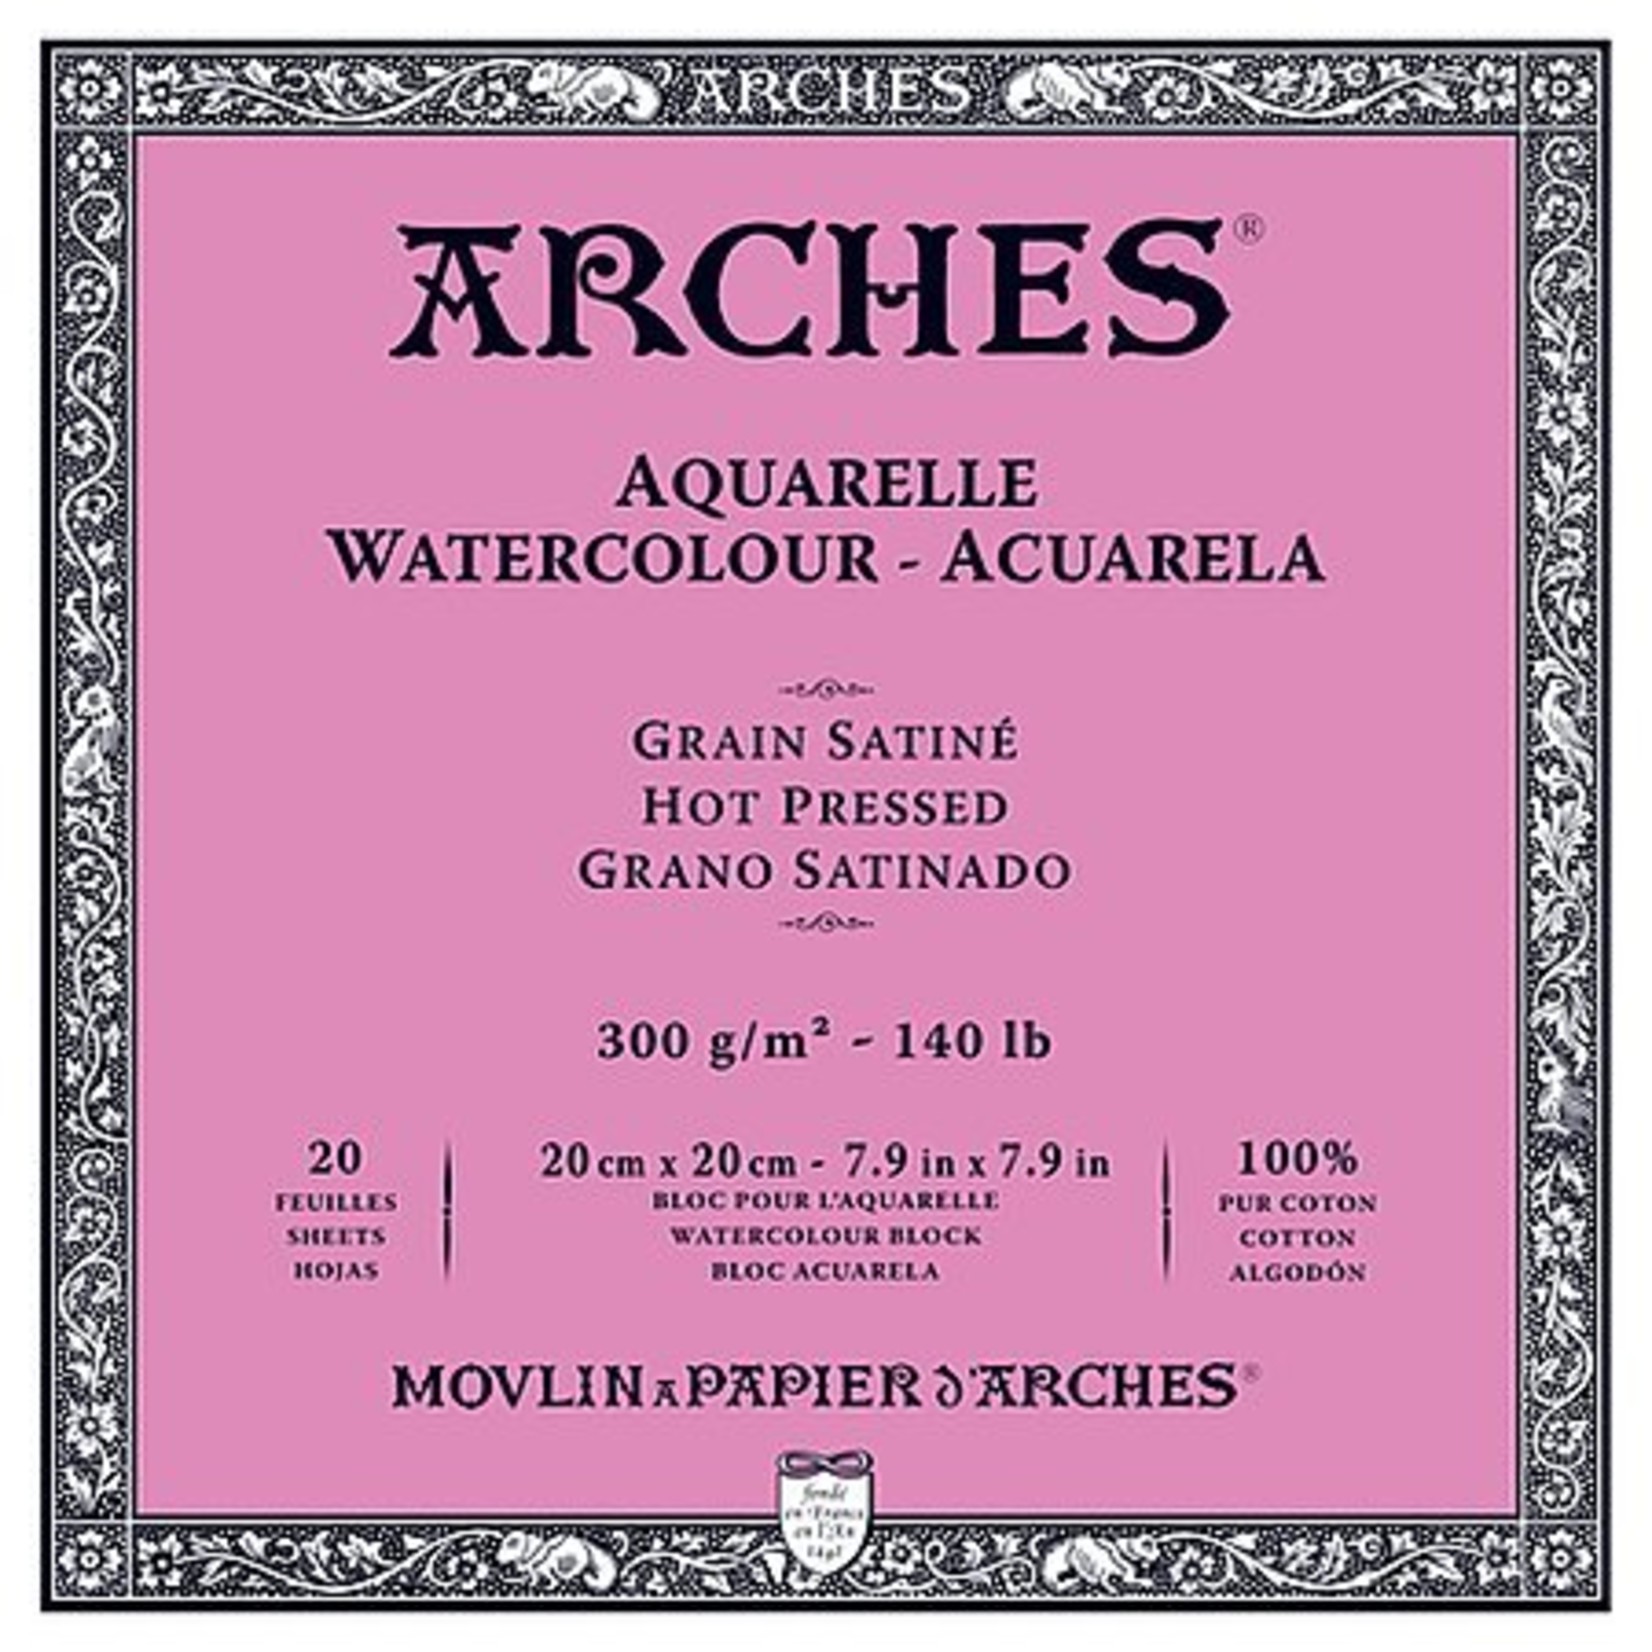 ARCHES ARCHES WATERCOLOUR BLOCK 140LB HP 3.9X9.8